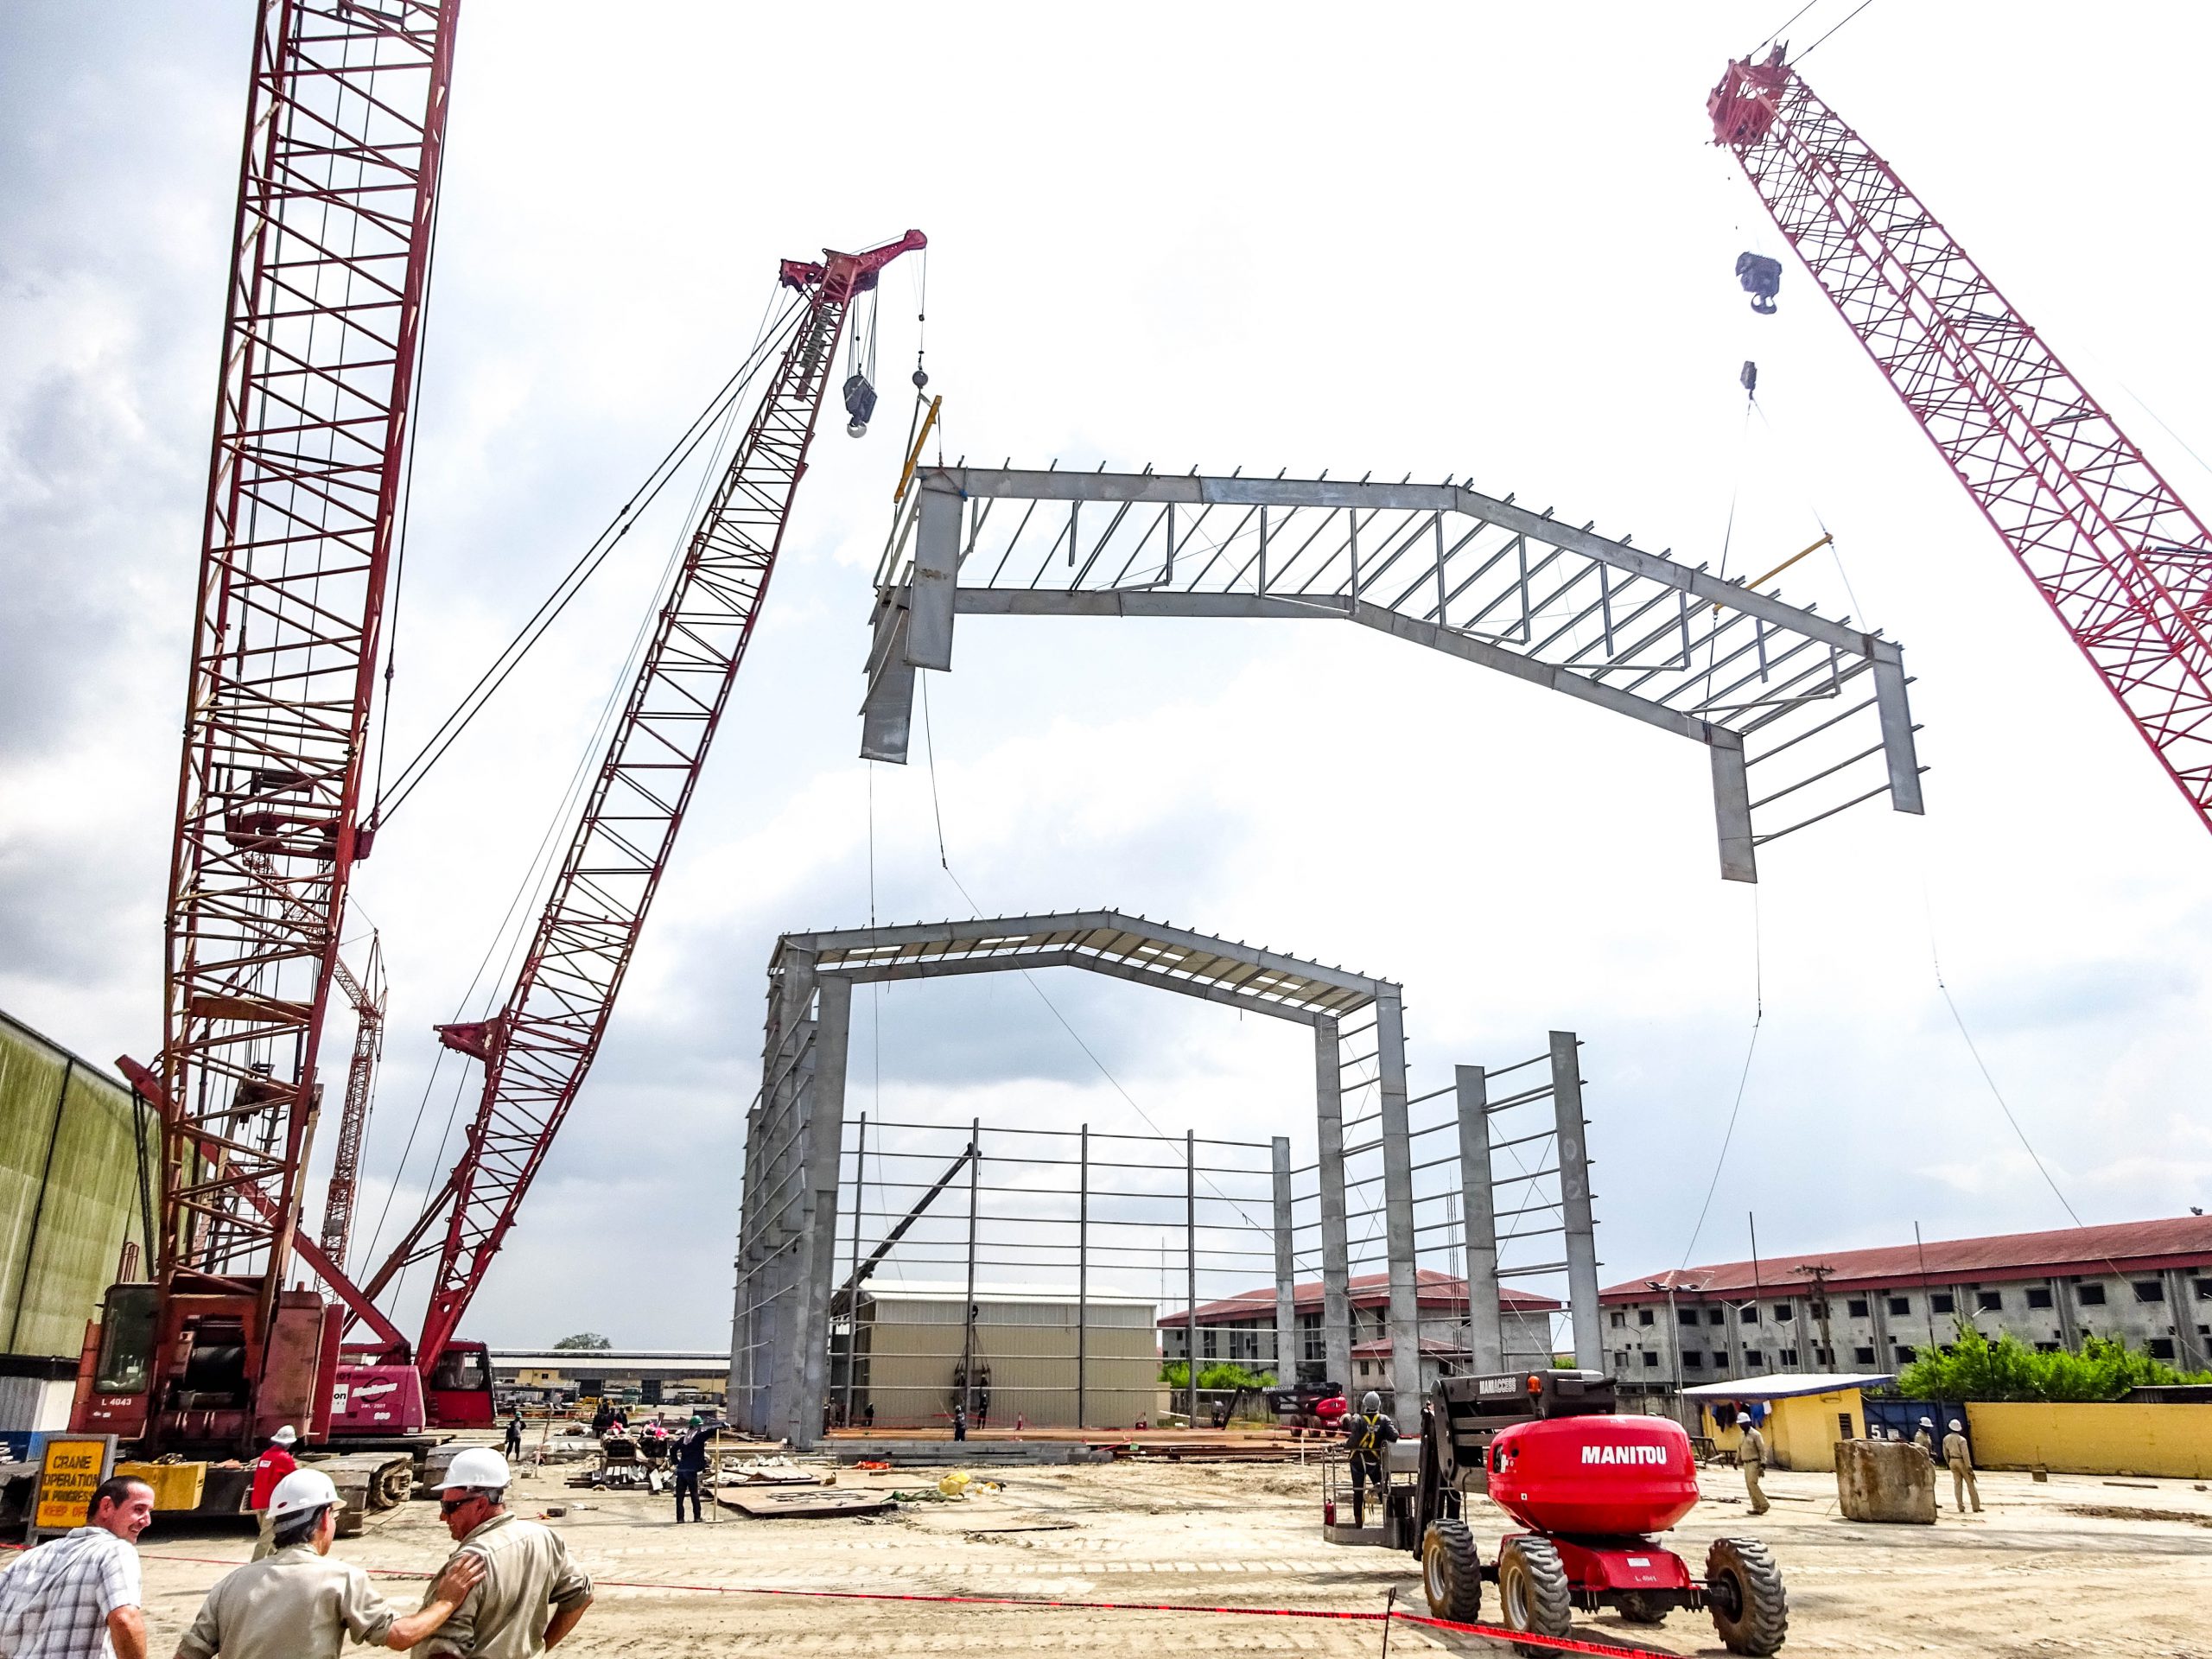 Industrial Construction located in Port Harcourt, Nigeria - DREAM IT. BUILD IT.